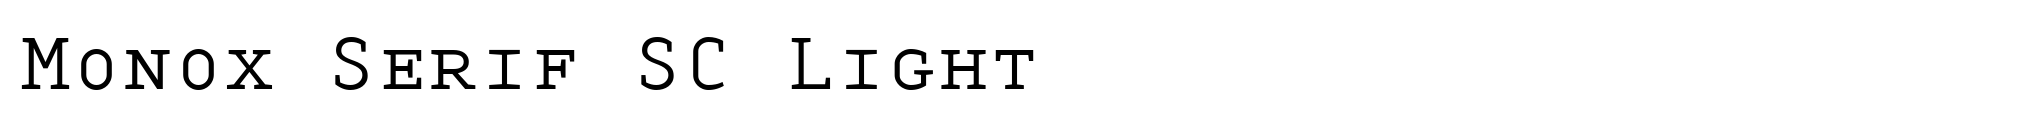 Monox Serif SC Light image